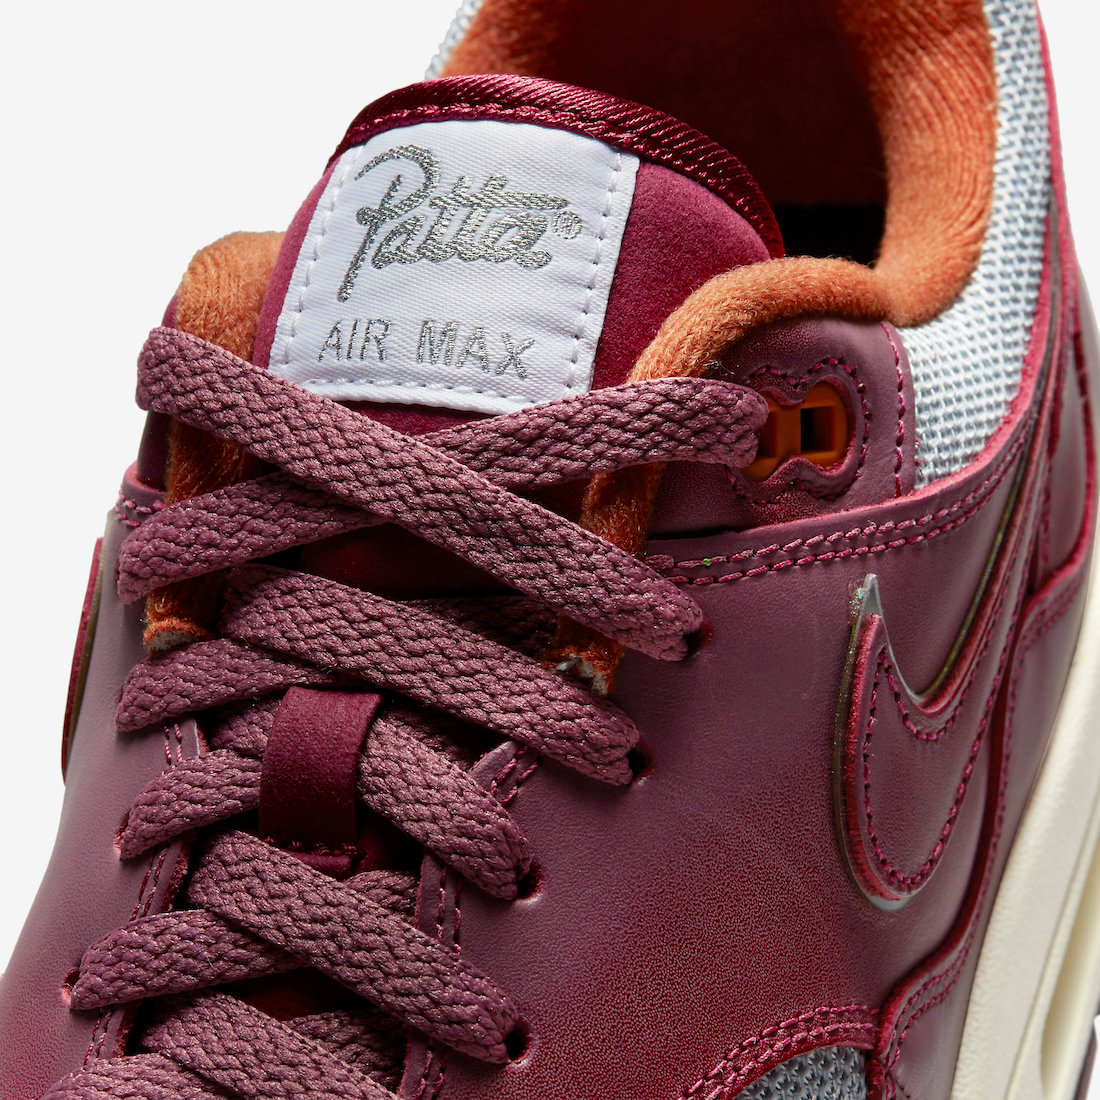 Patta x Nike Air Max 1 Rush Maroon DO9549-001 Release Date